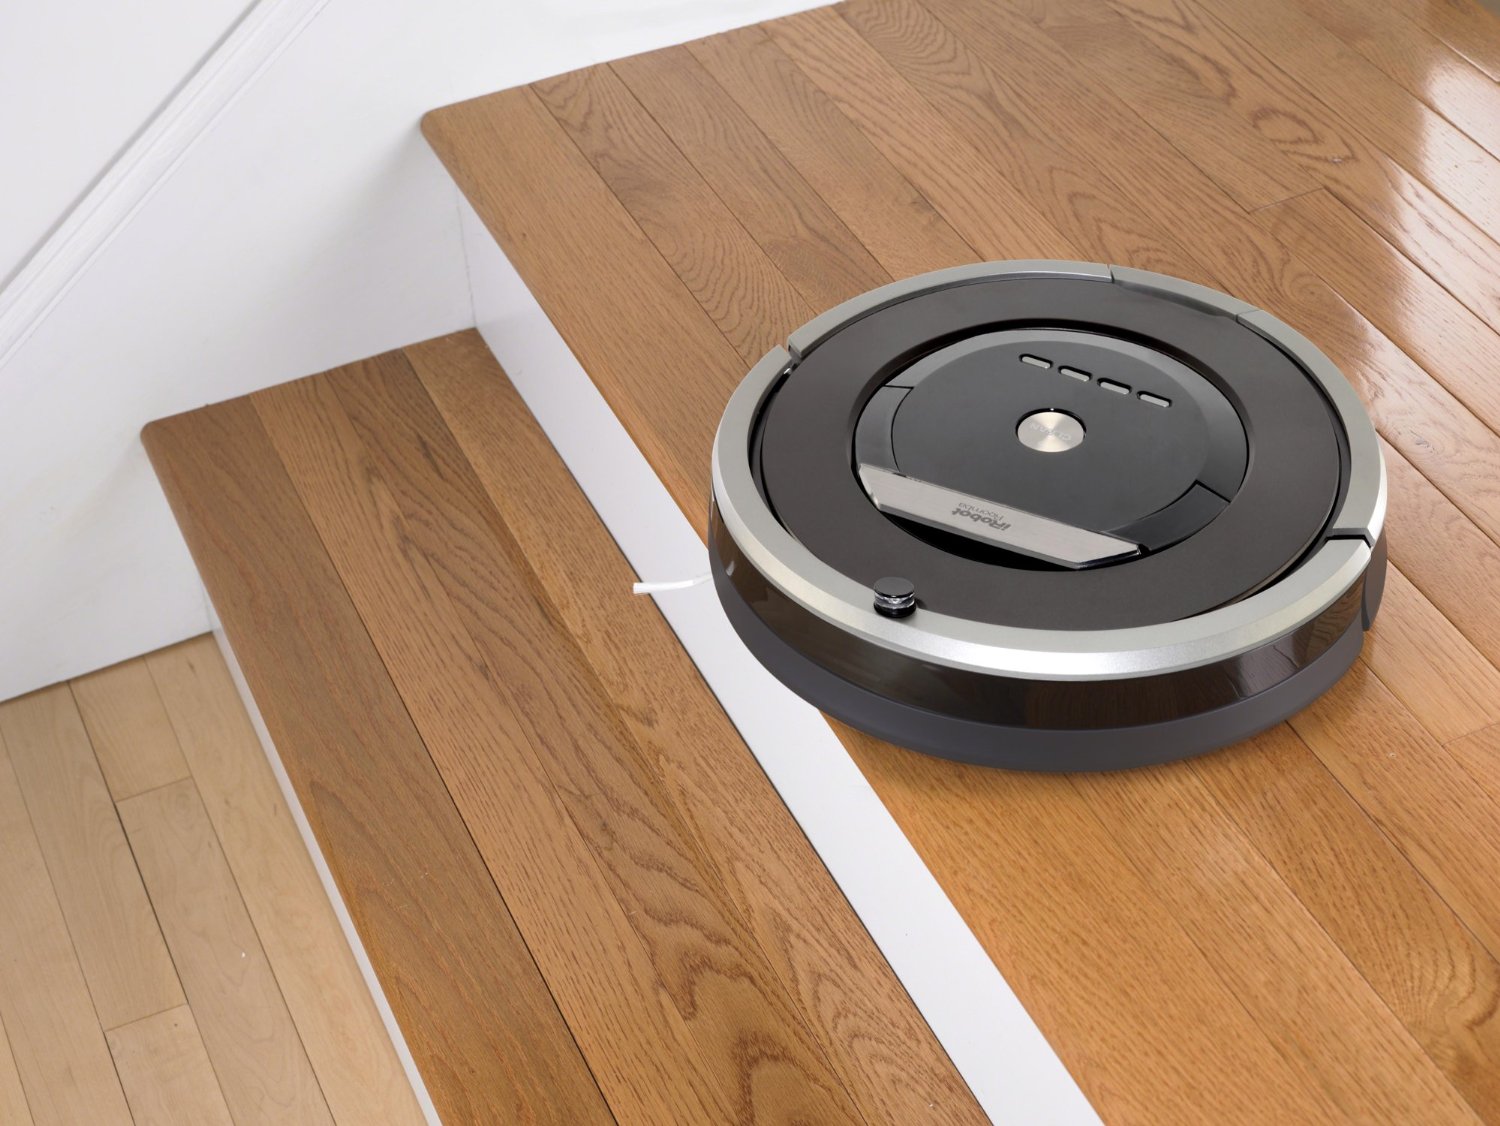 knal cruise uitdrukking Test: iRobot Roomba 870 robotstofzuiger